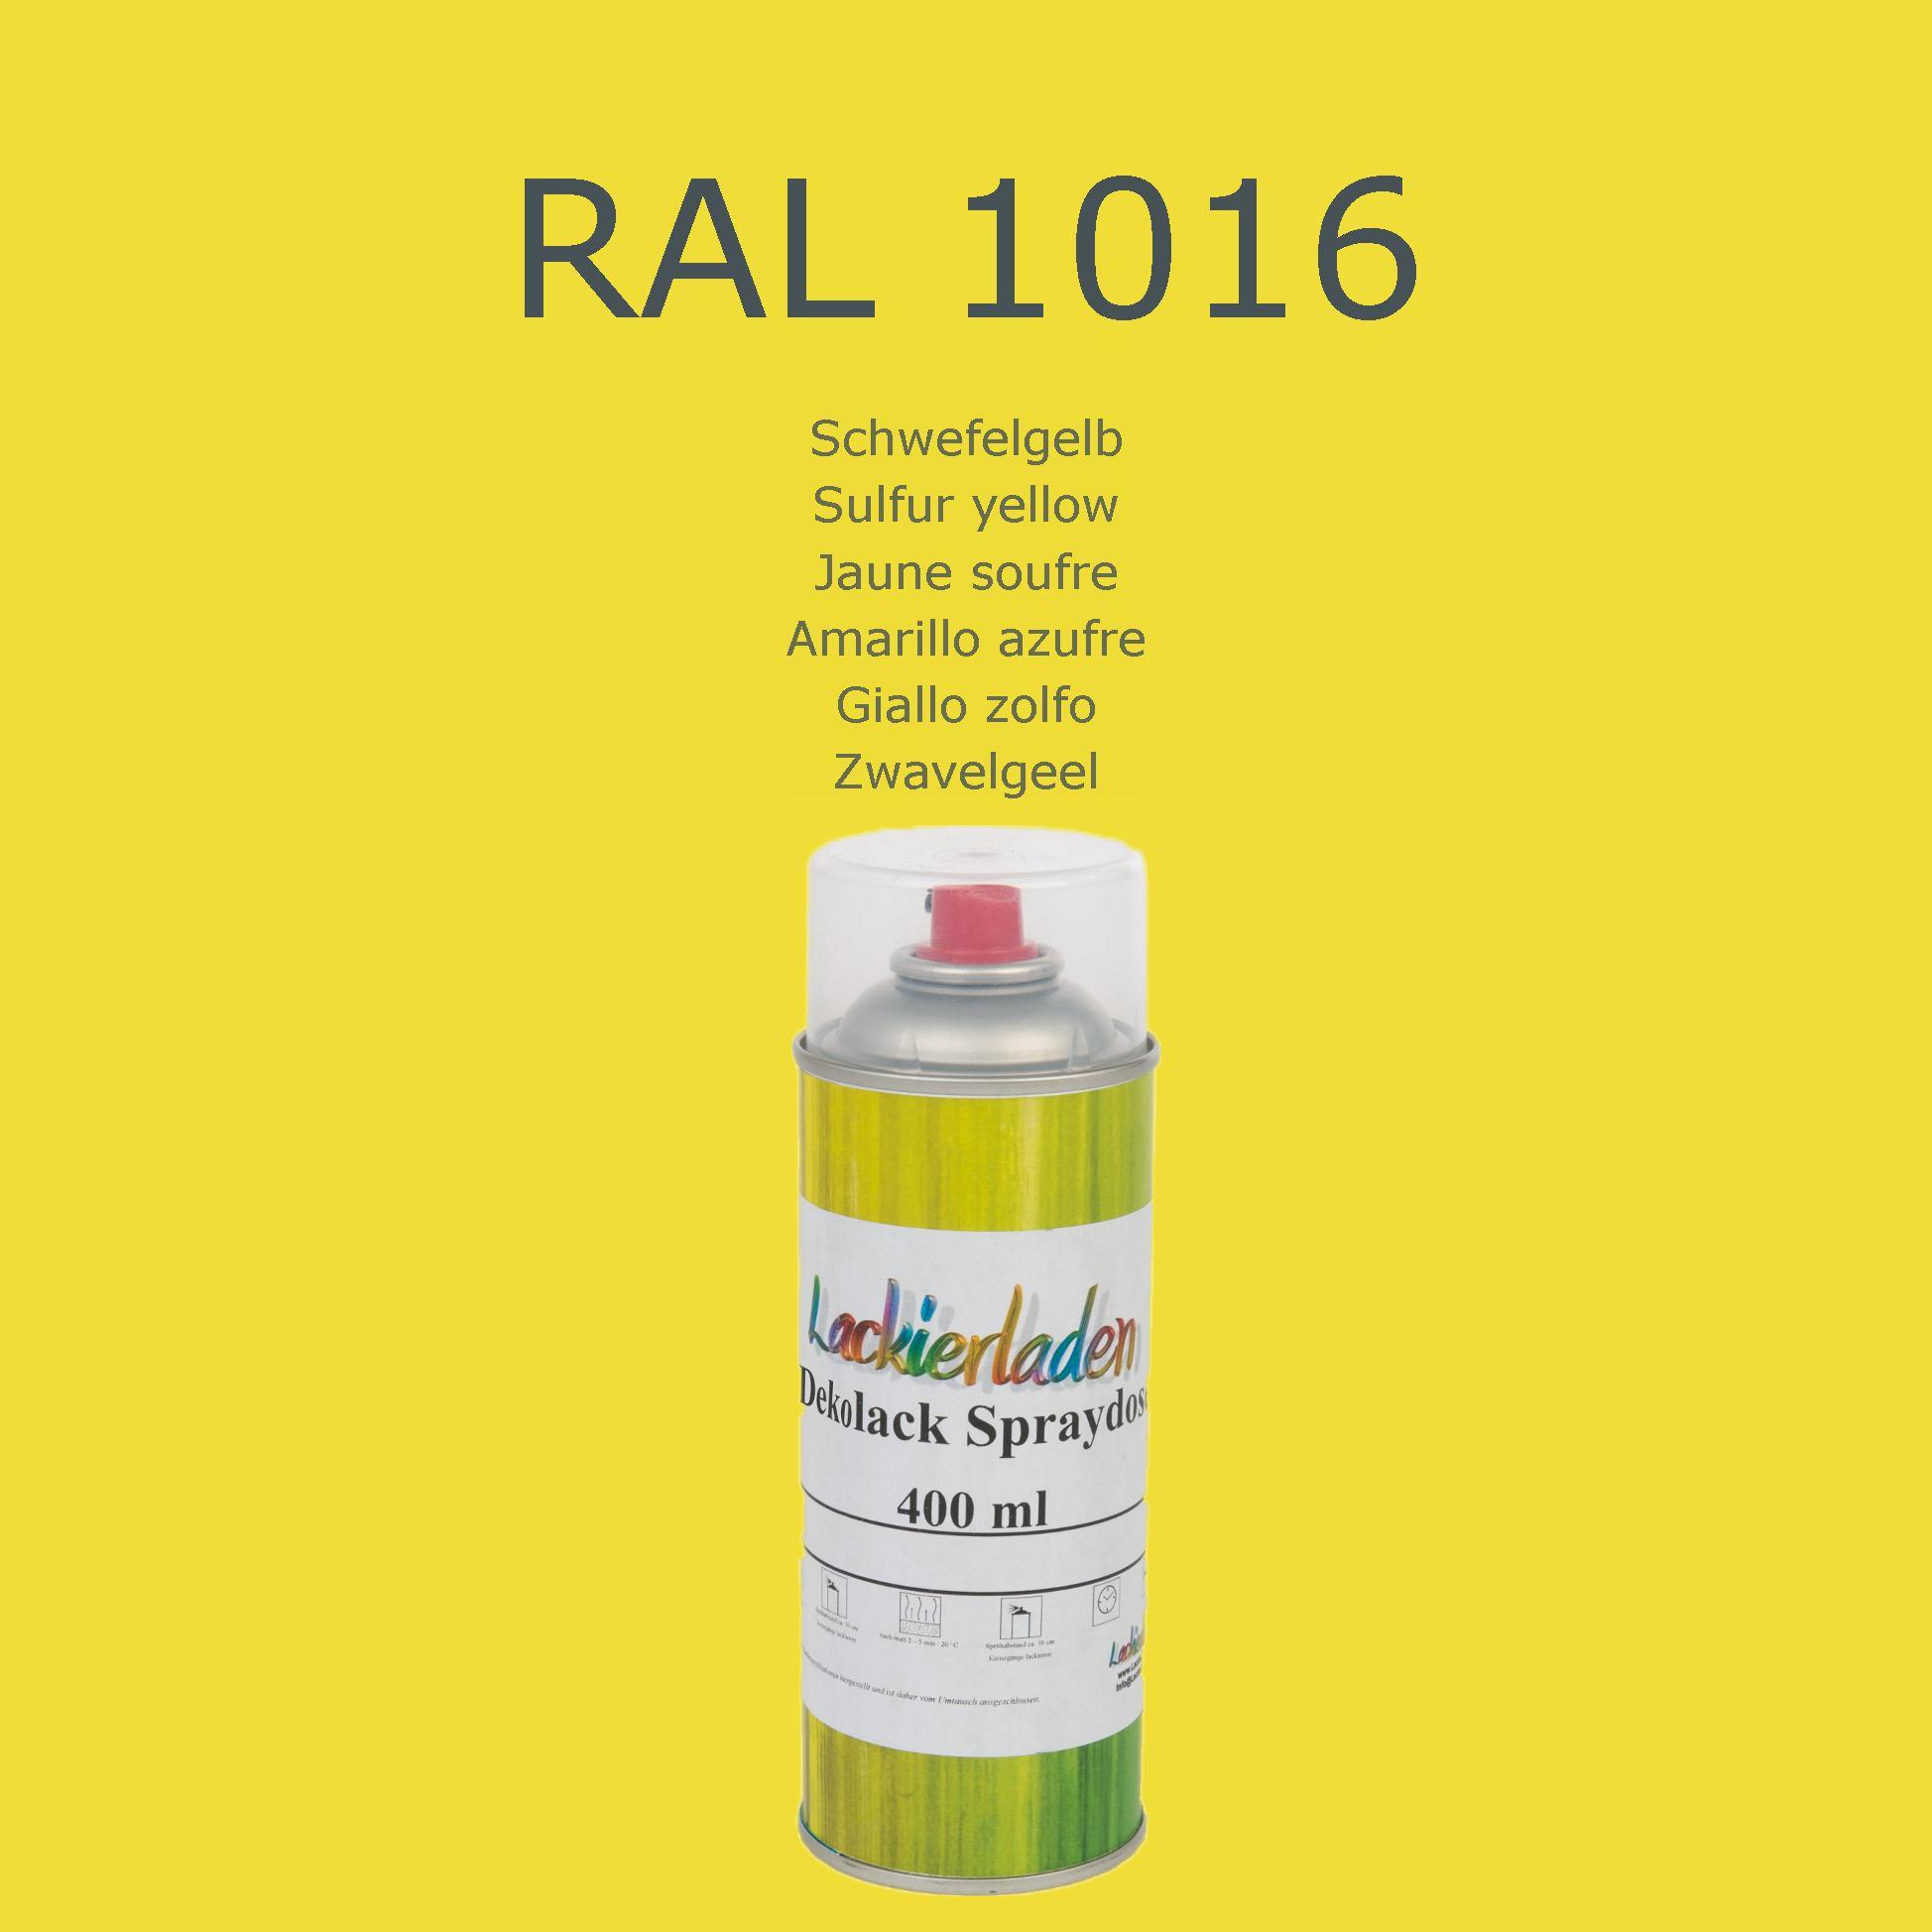 Dekolack Spraydose 400 ml RAL 1016 Schwefelgelb Sulfur yellow Jaune soufre Amarillo azufre Giallo zolfo Zwavelgeel | Decolack Lackspray Sprüh Dose